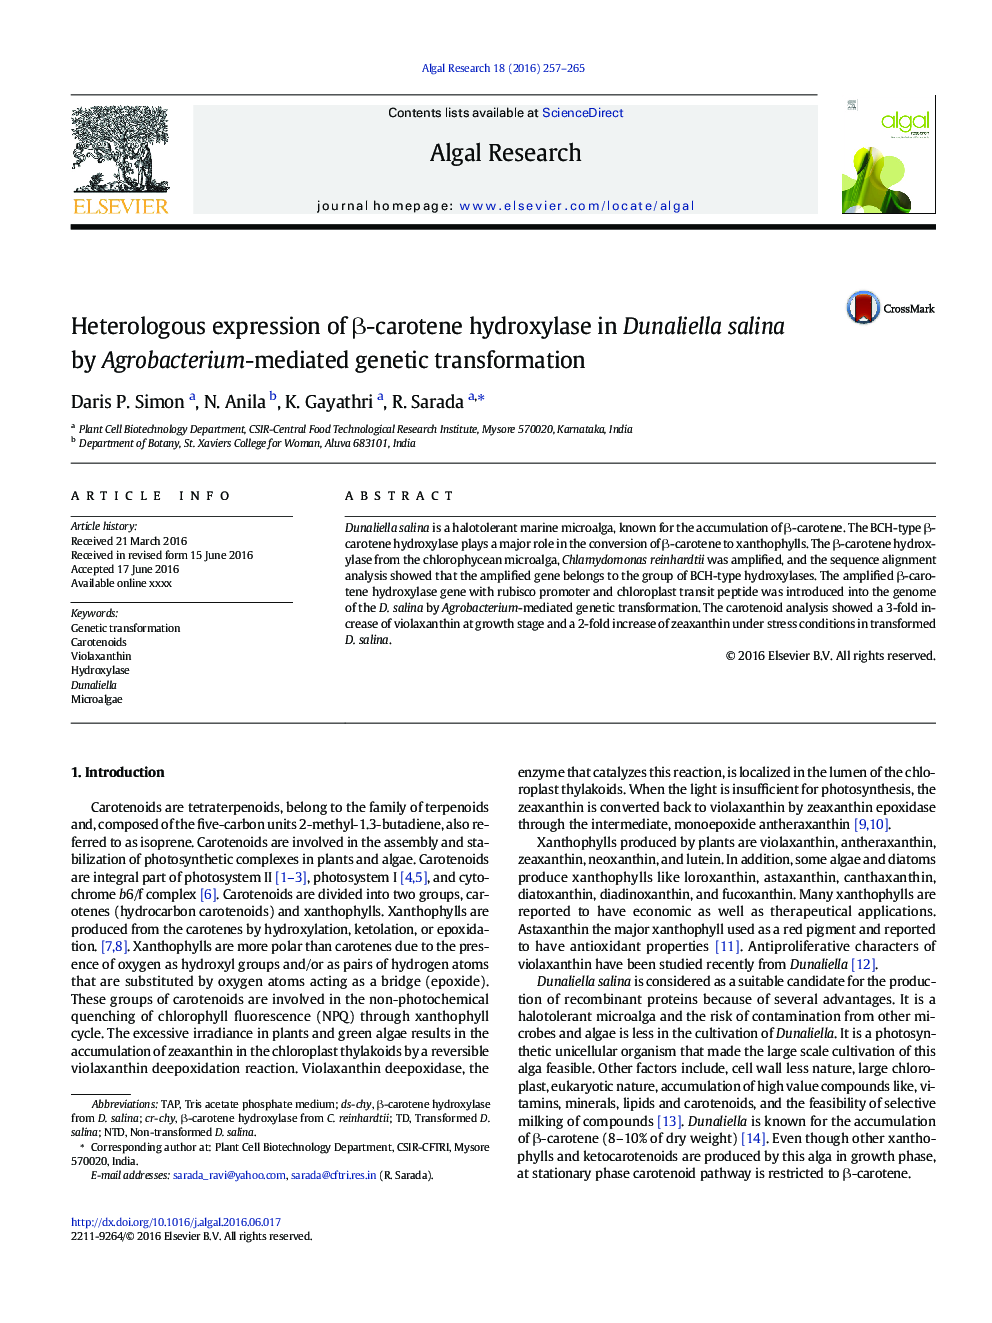 Heterologous expression of Î²-carotene hydroxylase in Dunaliella salina by Agrobacterium-mediated genetic transformation